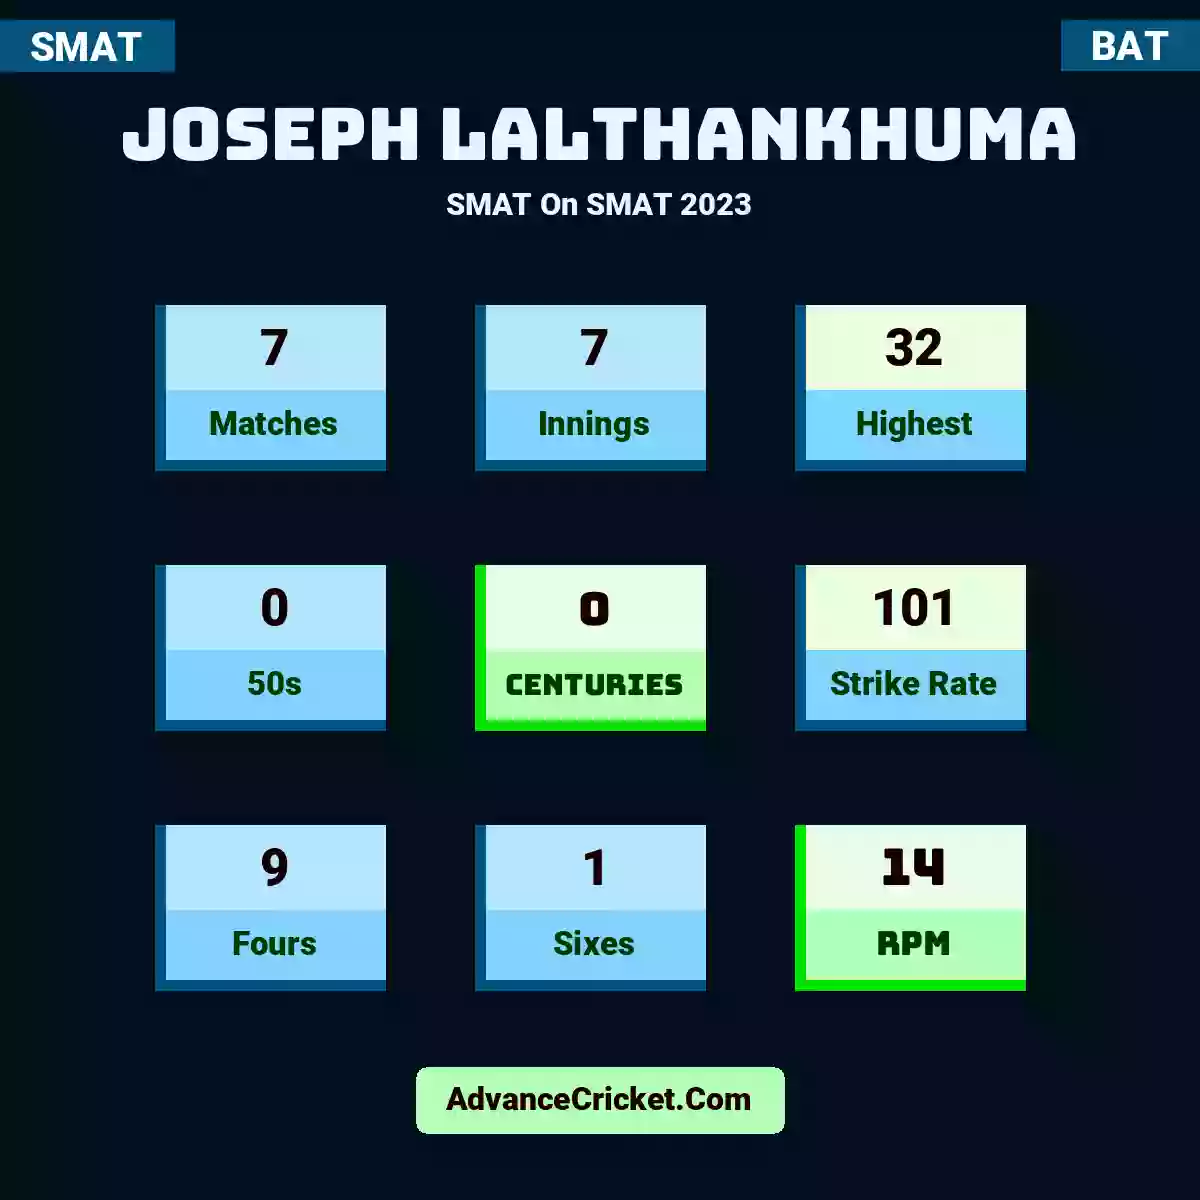 Joseph Lalthankhuma SMAT  On SMAT 2023, Joseph Lalthankhuma played 7 matches, scored 32 runs as highest, 0 half-centuries, and 0 centuries, with a strike rate of 101. J.Lalthankhuma hit 9 fours and 1 sixes, with an RPM of 14.